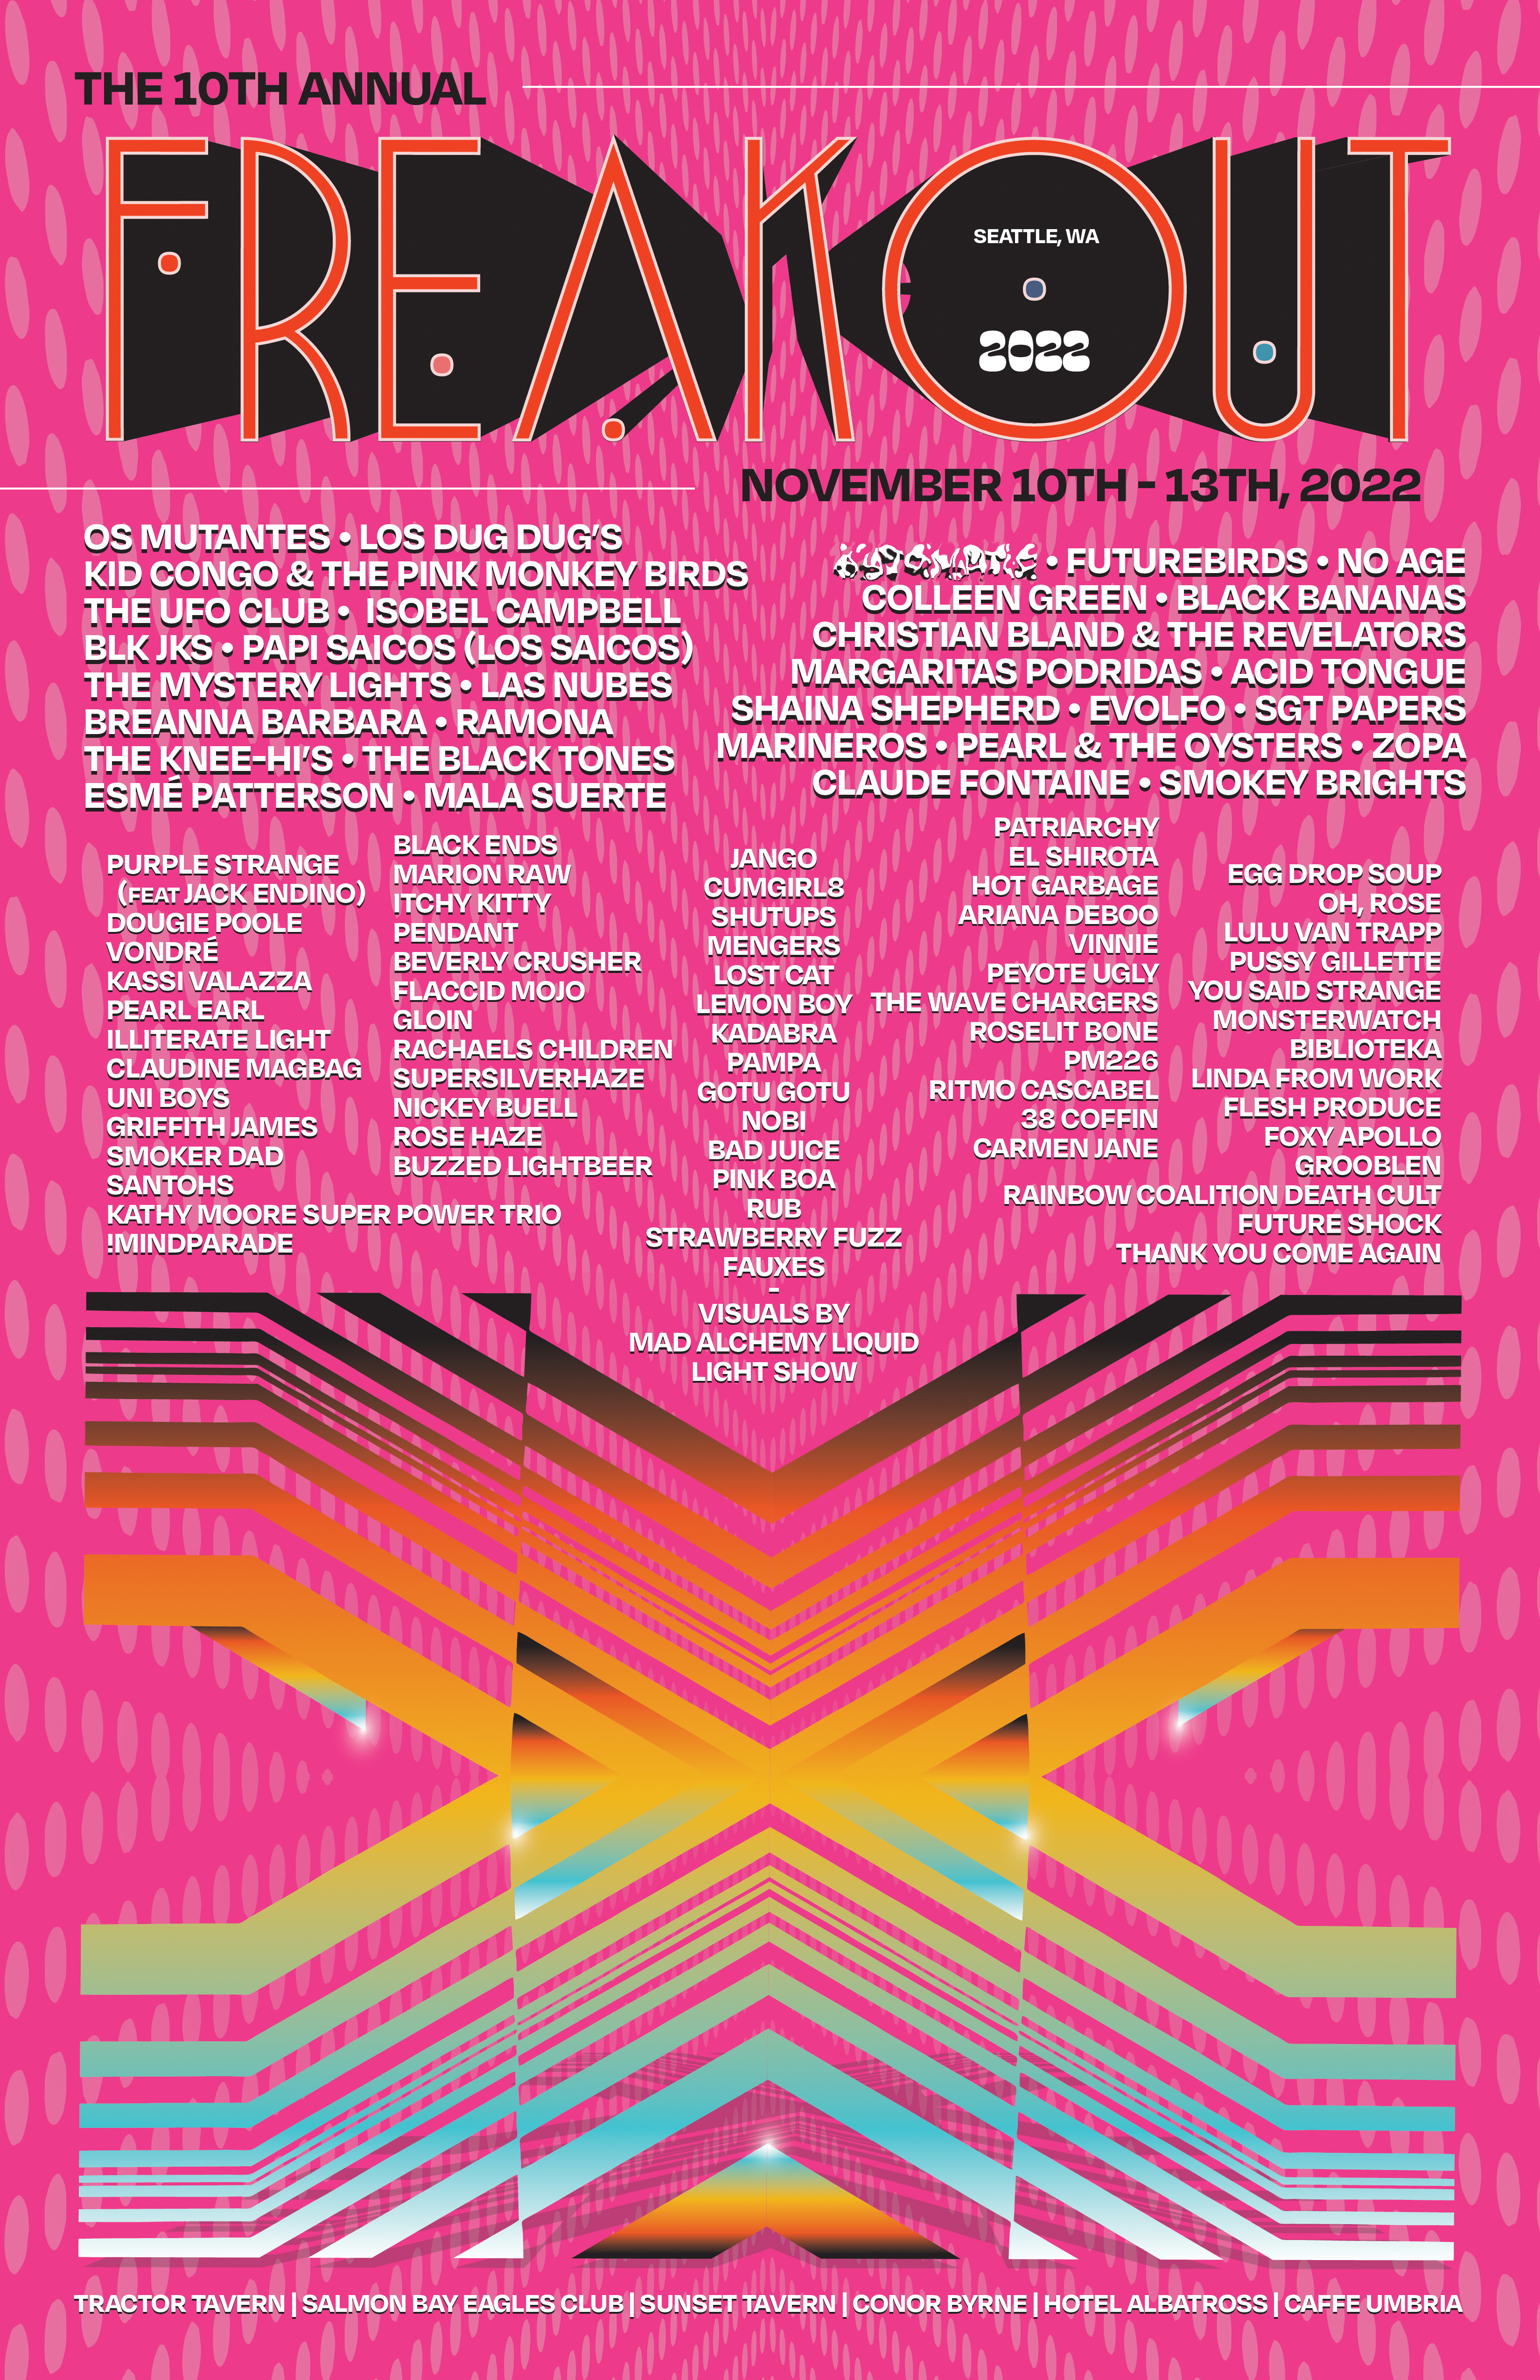 11/11/2022, Seattle, Freakout Fest, Tractor Tavern